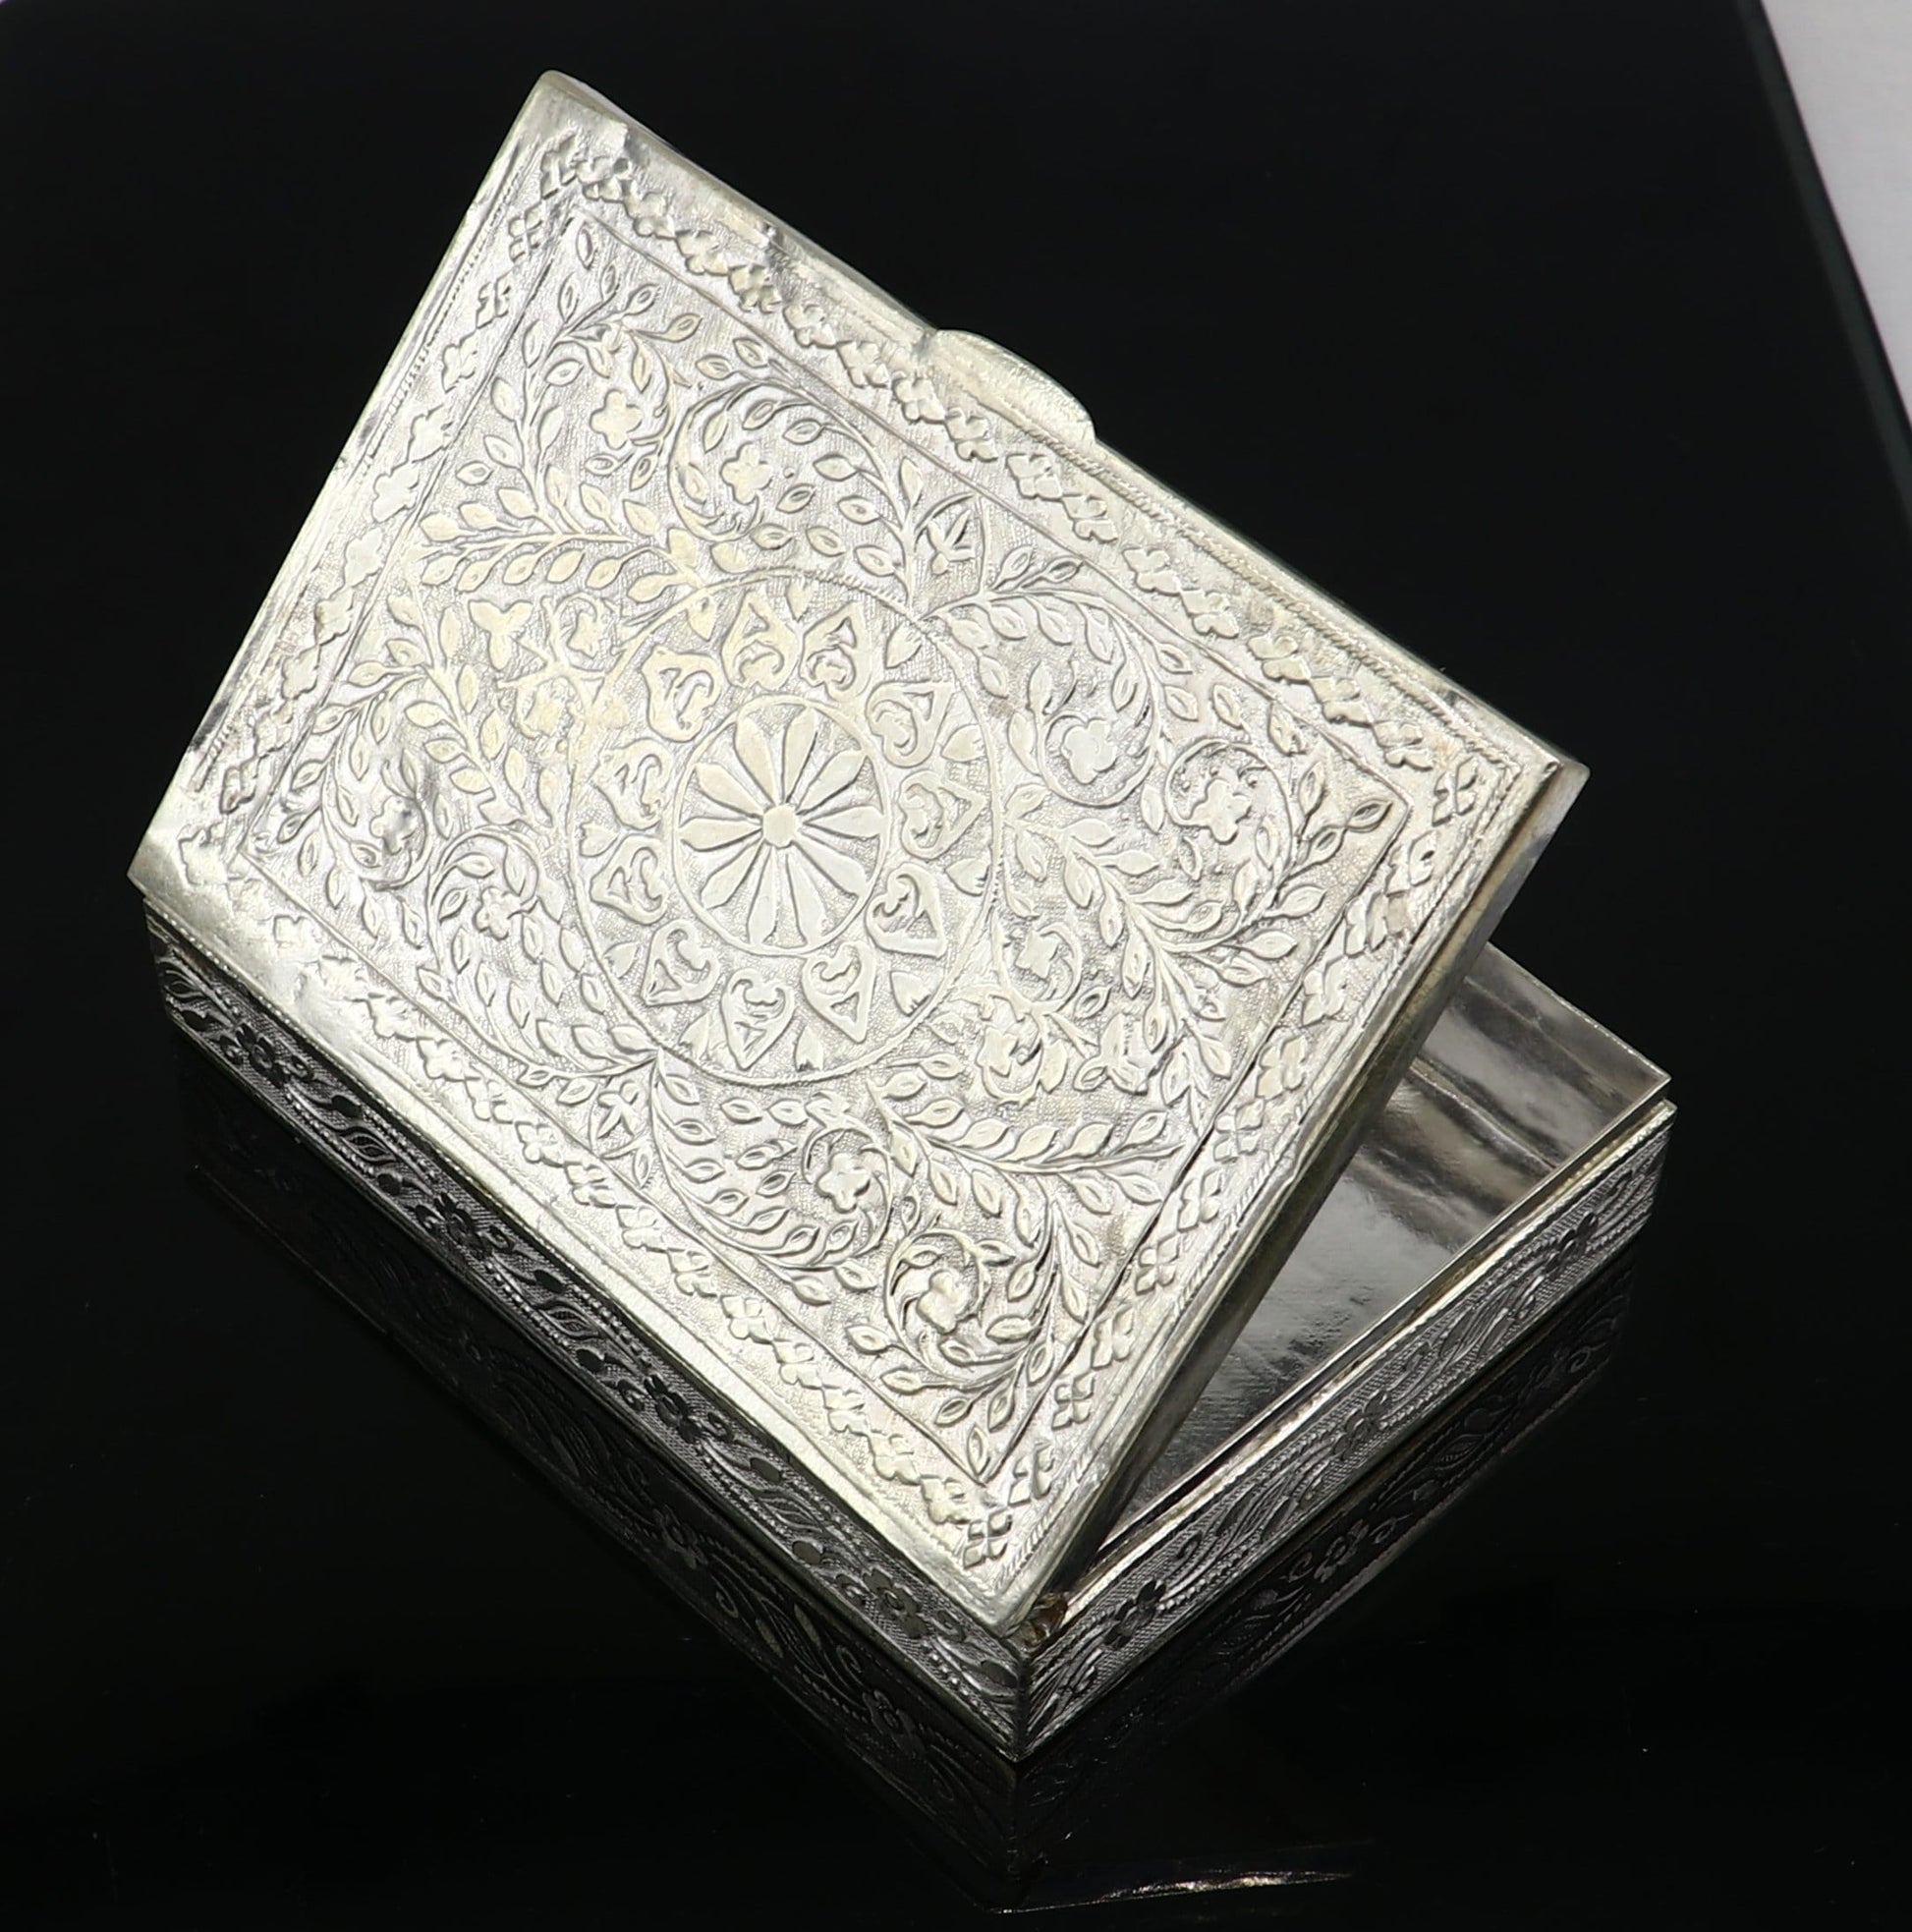 4"x 3" inches 925 sterling silver trinket box casket box container cigar box, sanduk/tijori brides jewelry box collectible pieces stb786 - TRIBAL ORNAMENTS